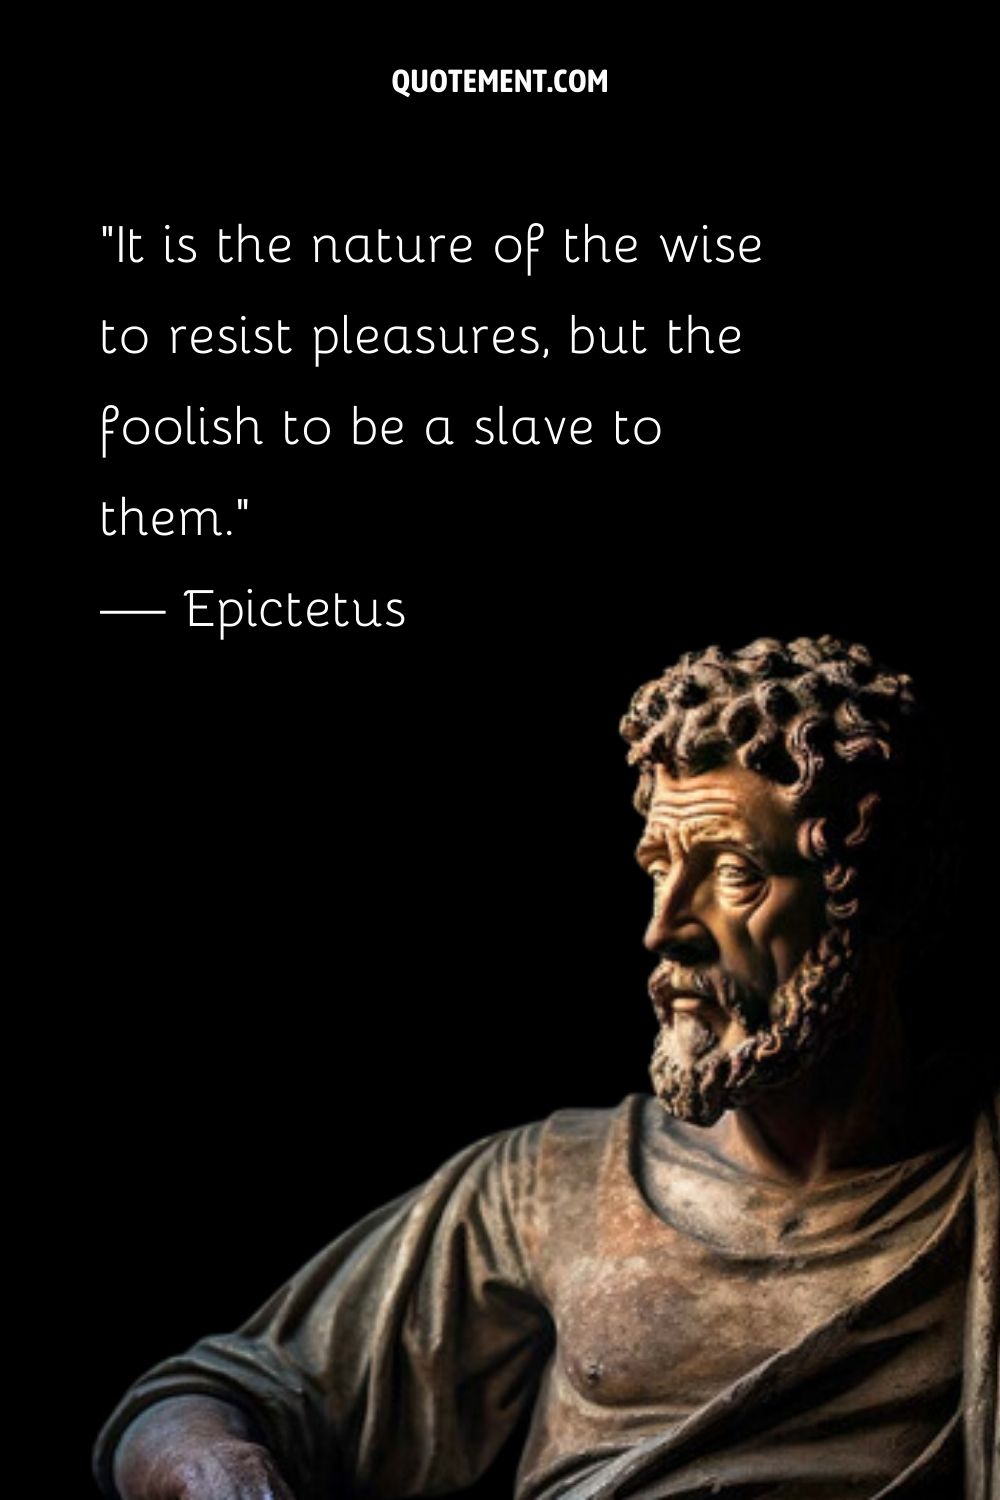 Epictetus' stoic wisdom eternally captured in marble